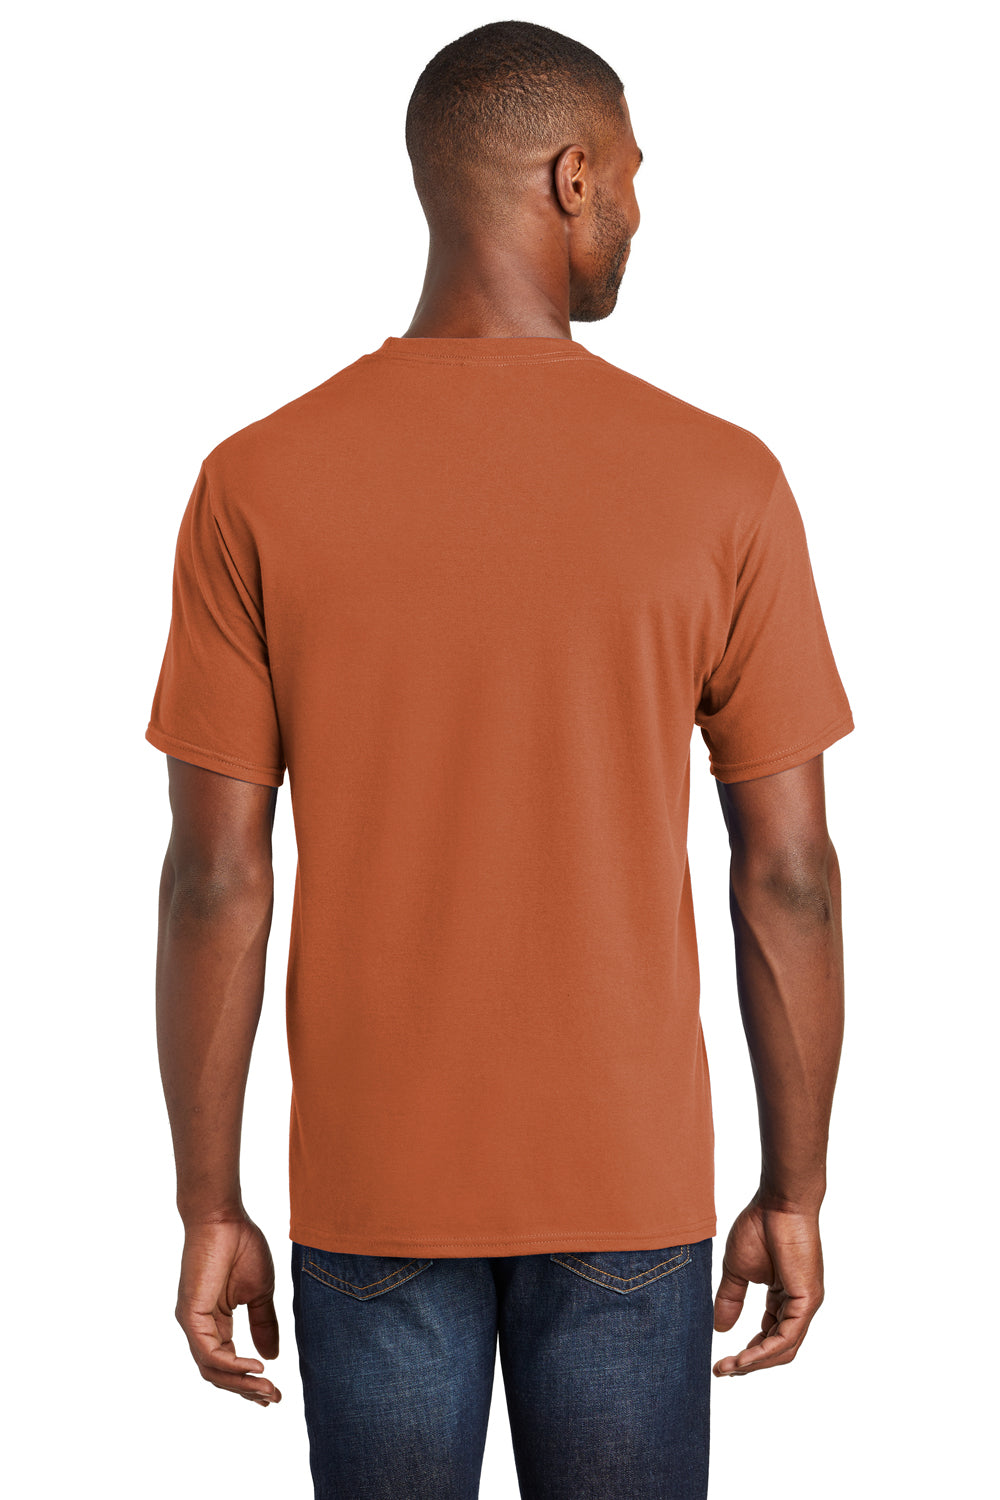 Port & Company PC450 Mens Fan Favorite Short Sleeve Crewneck T-Shirt Texas Orange Back